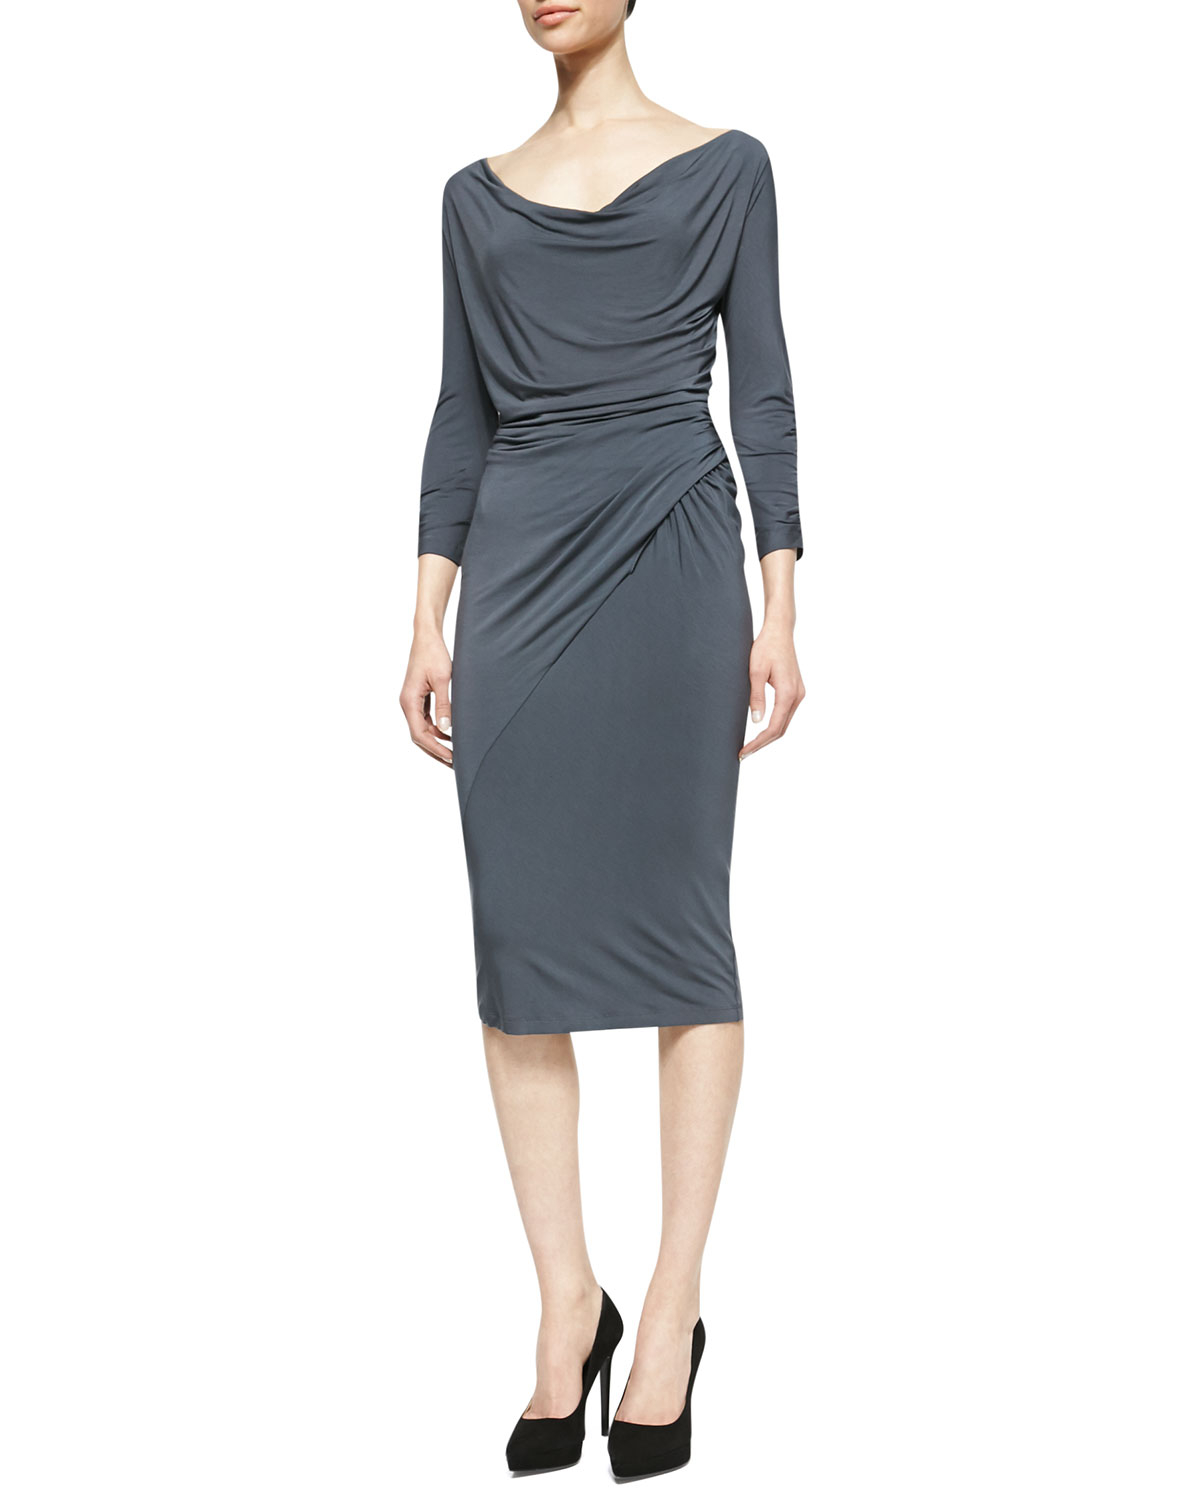 Donna Karan Draped Scoopneck Jersey Dress in Gray - Lyst